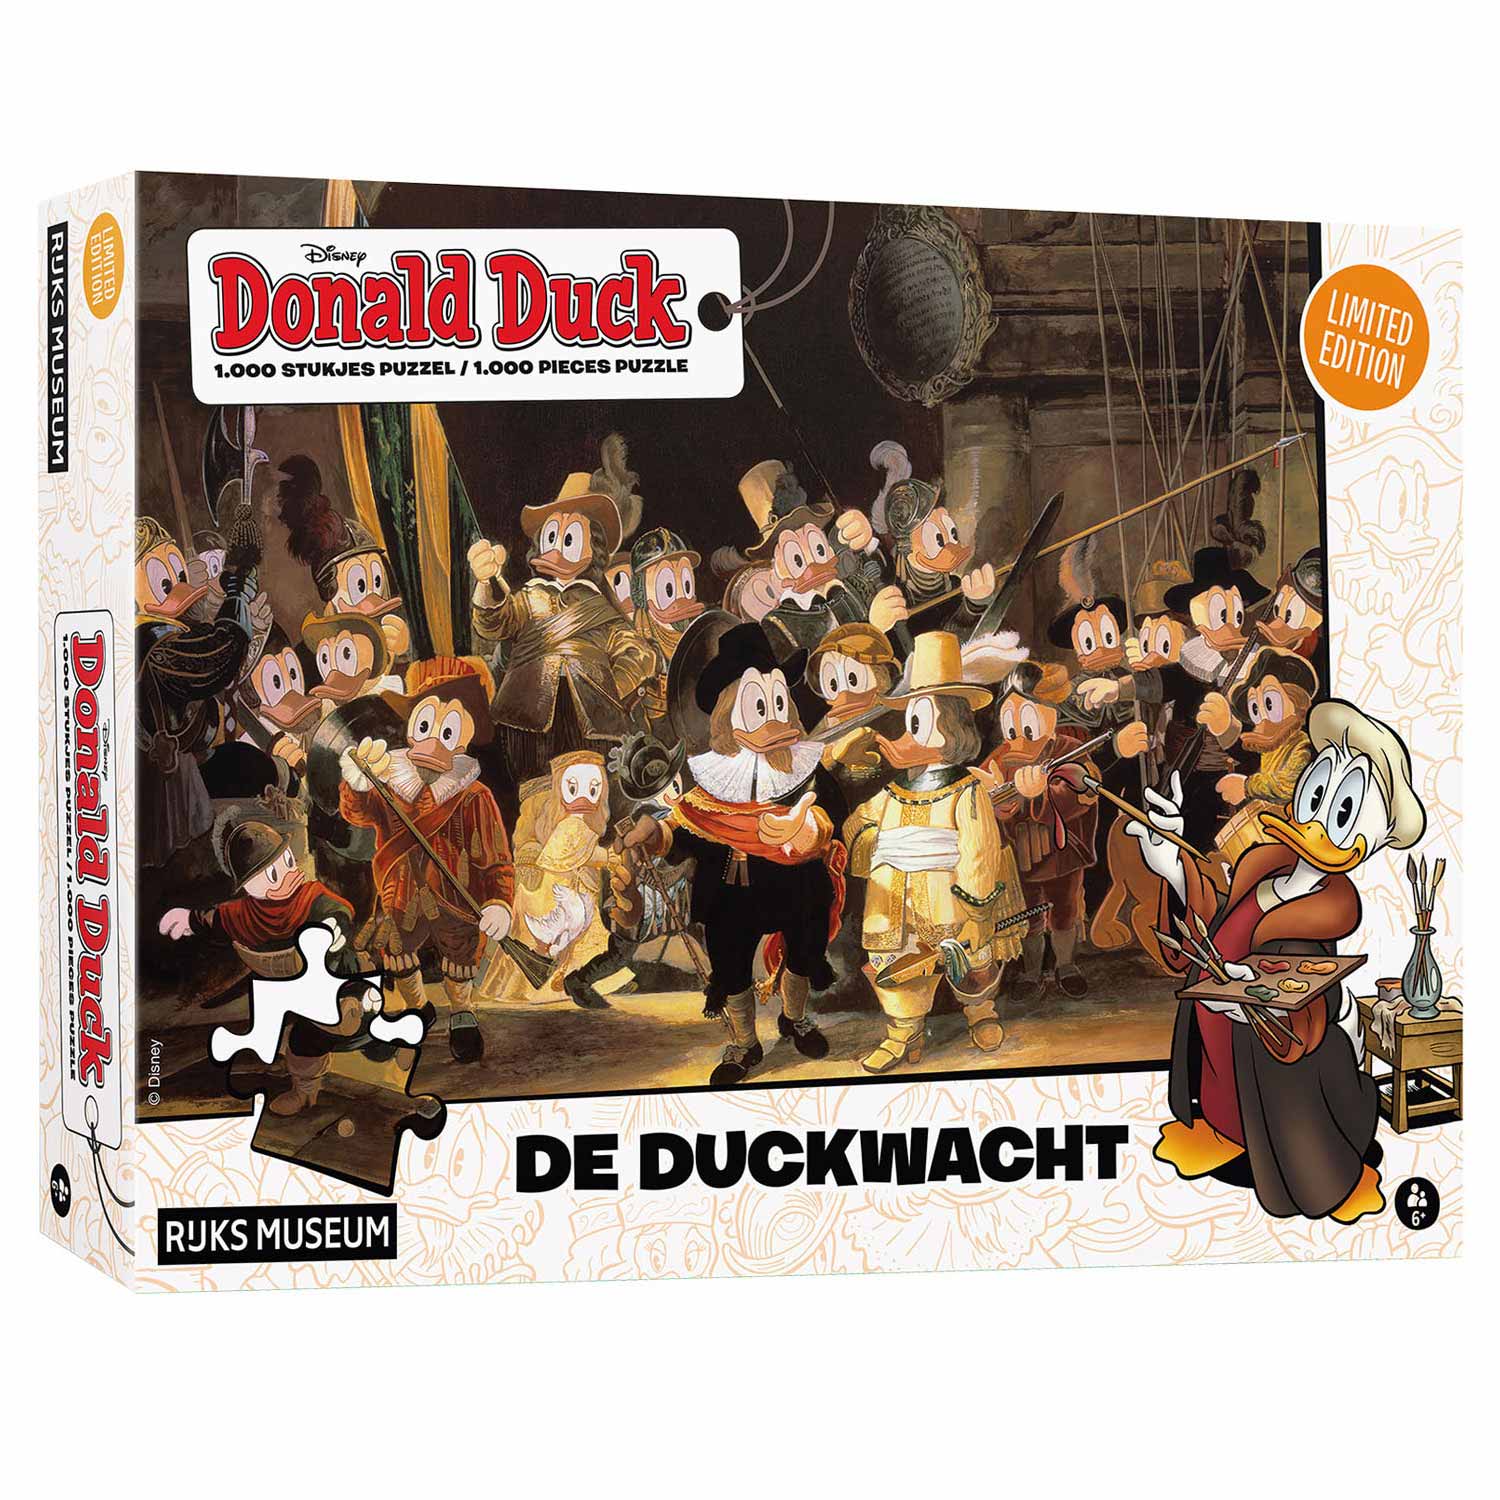 Donald Duck Puzzel - De Duckwacht, 1.000st